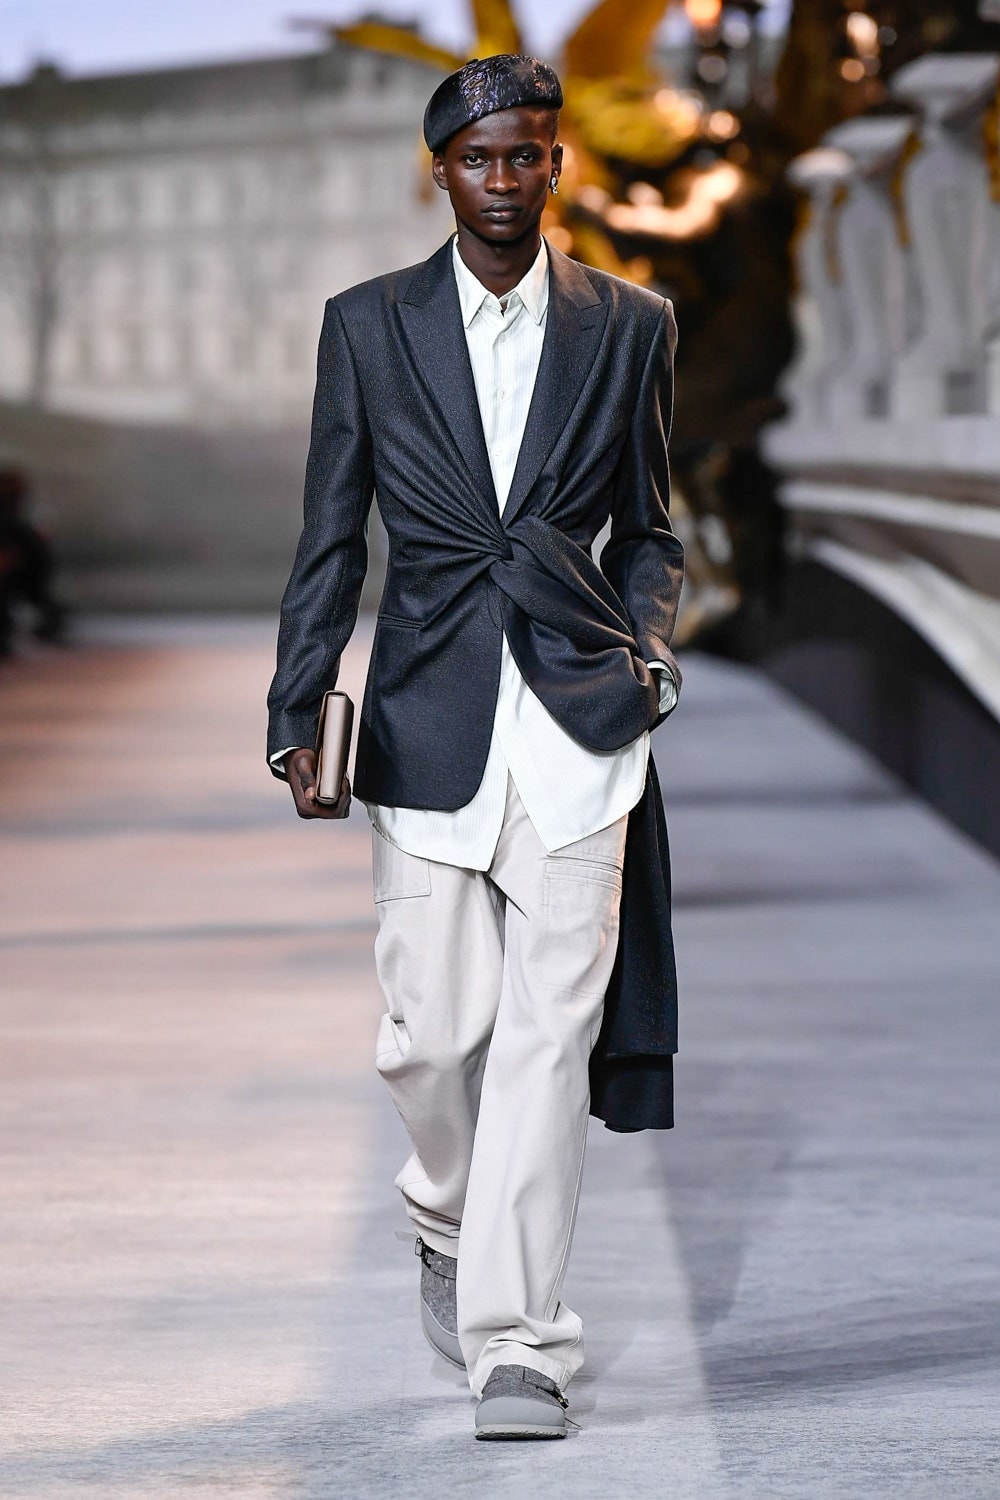 Essential: Louis Vuitton's Kim Jones Designs and Releases Three